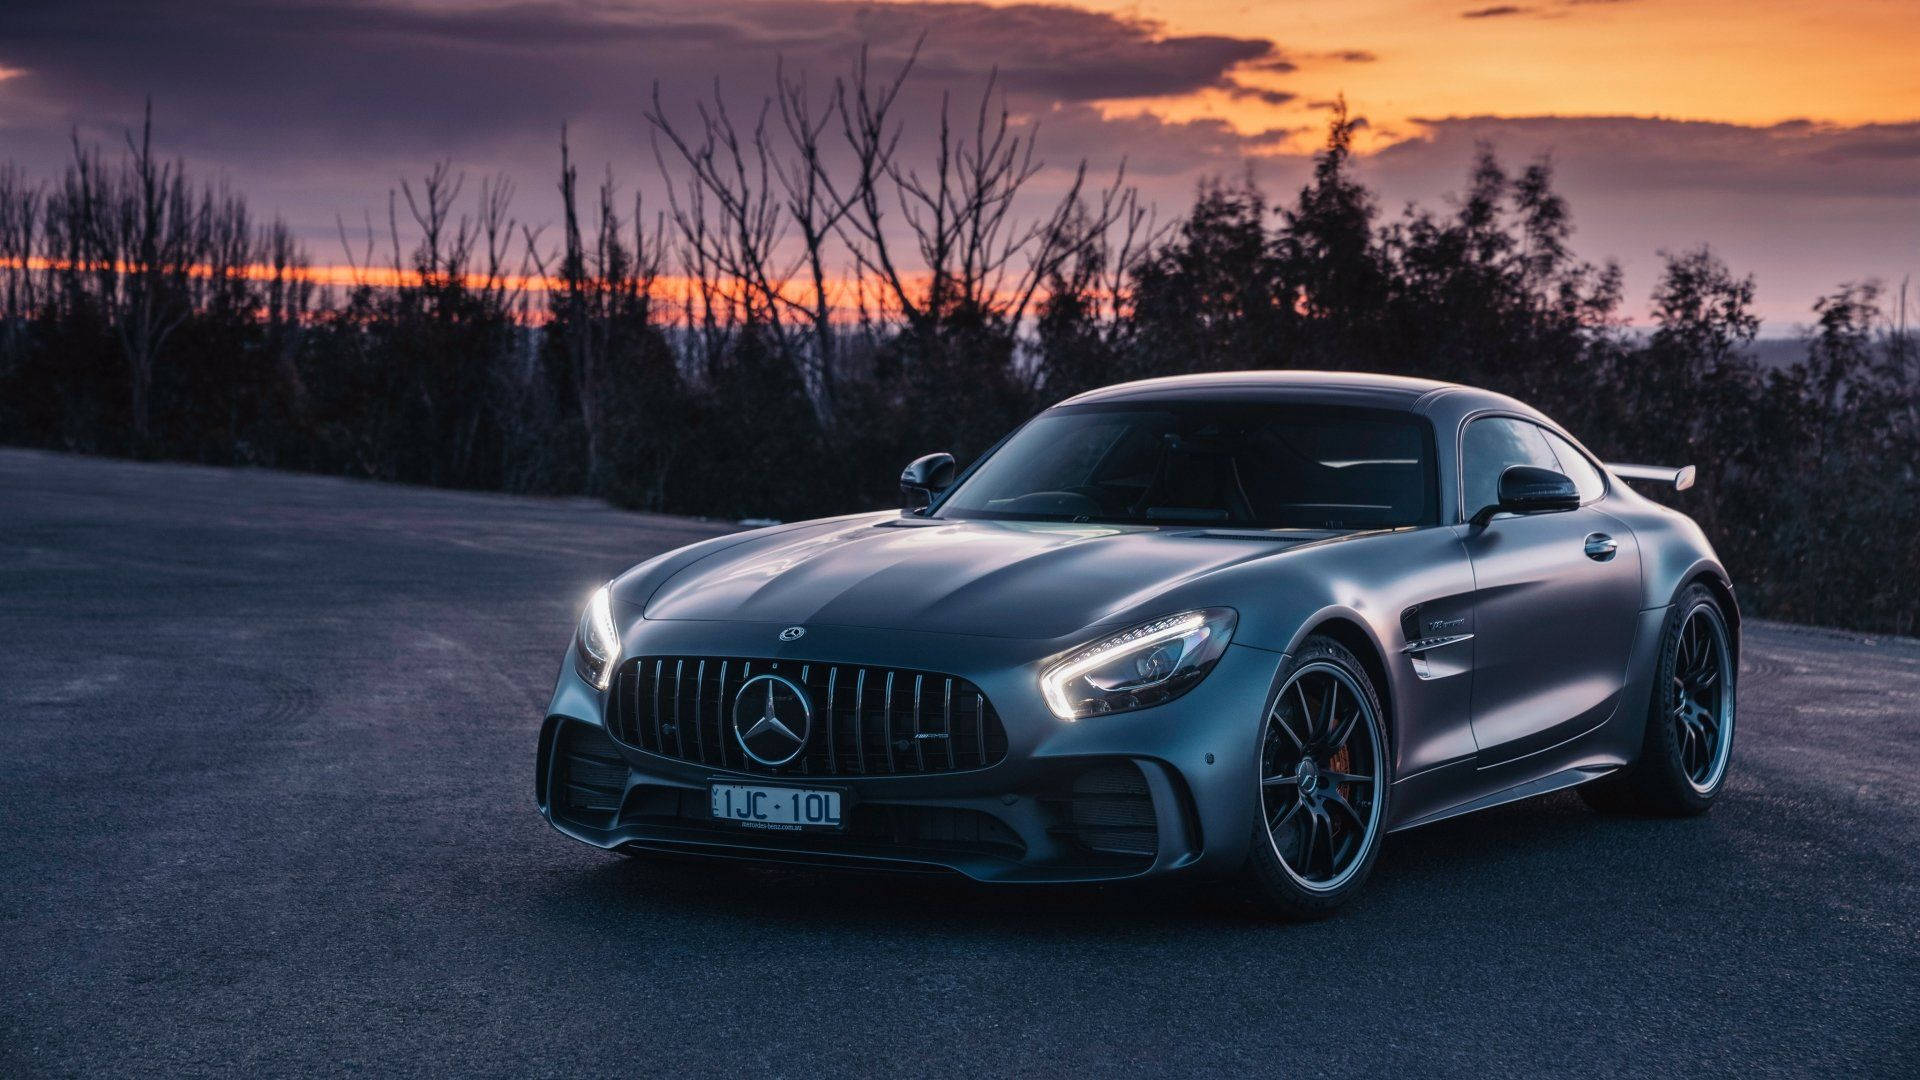 Caption: Majestic Mercedes AMG GTR Poised for Thrills Wallpaper